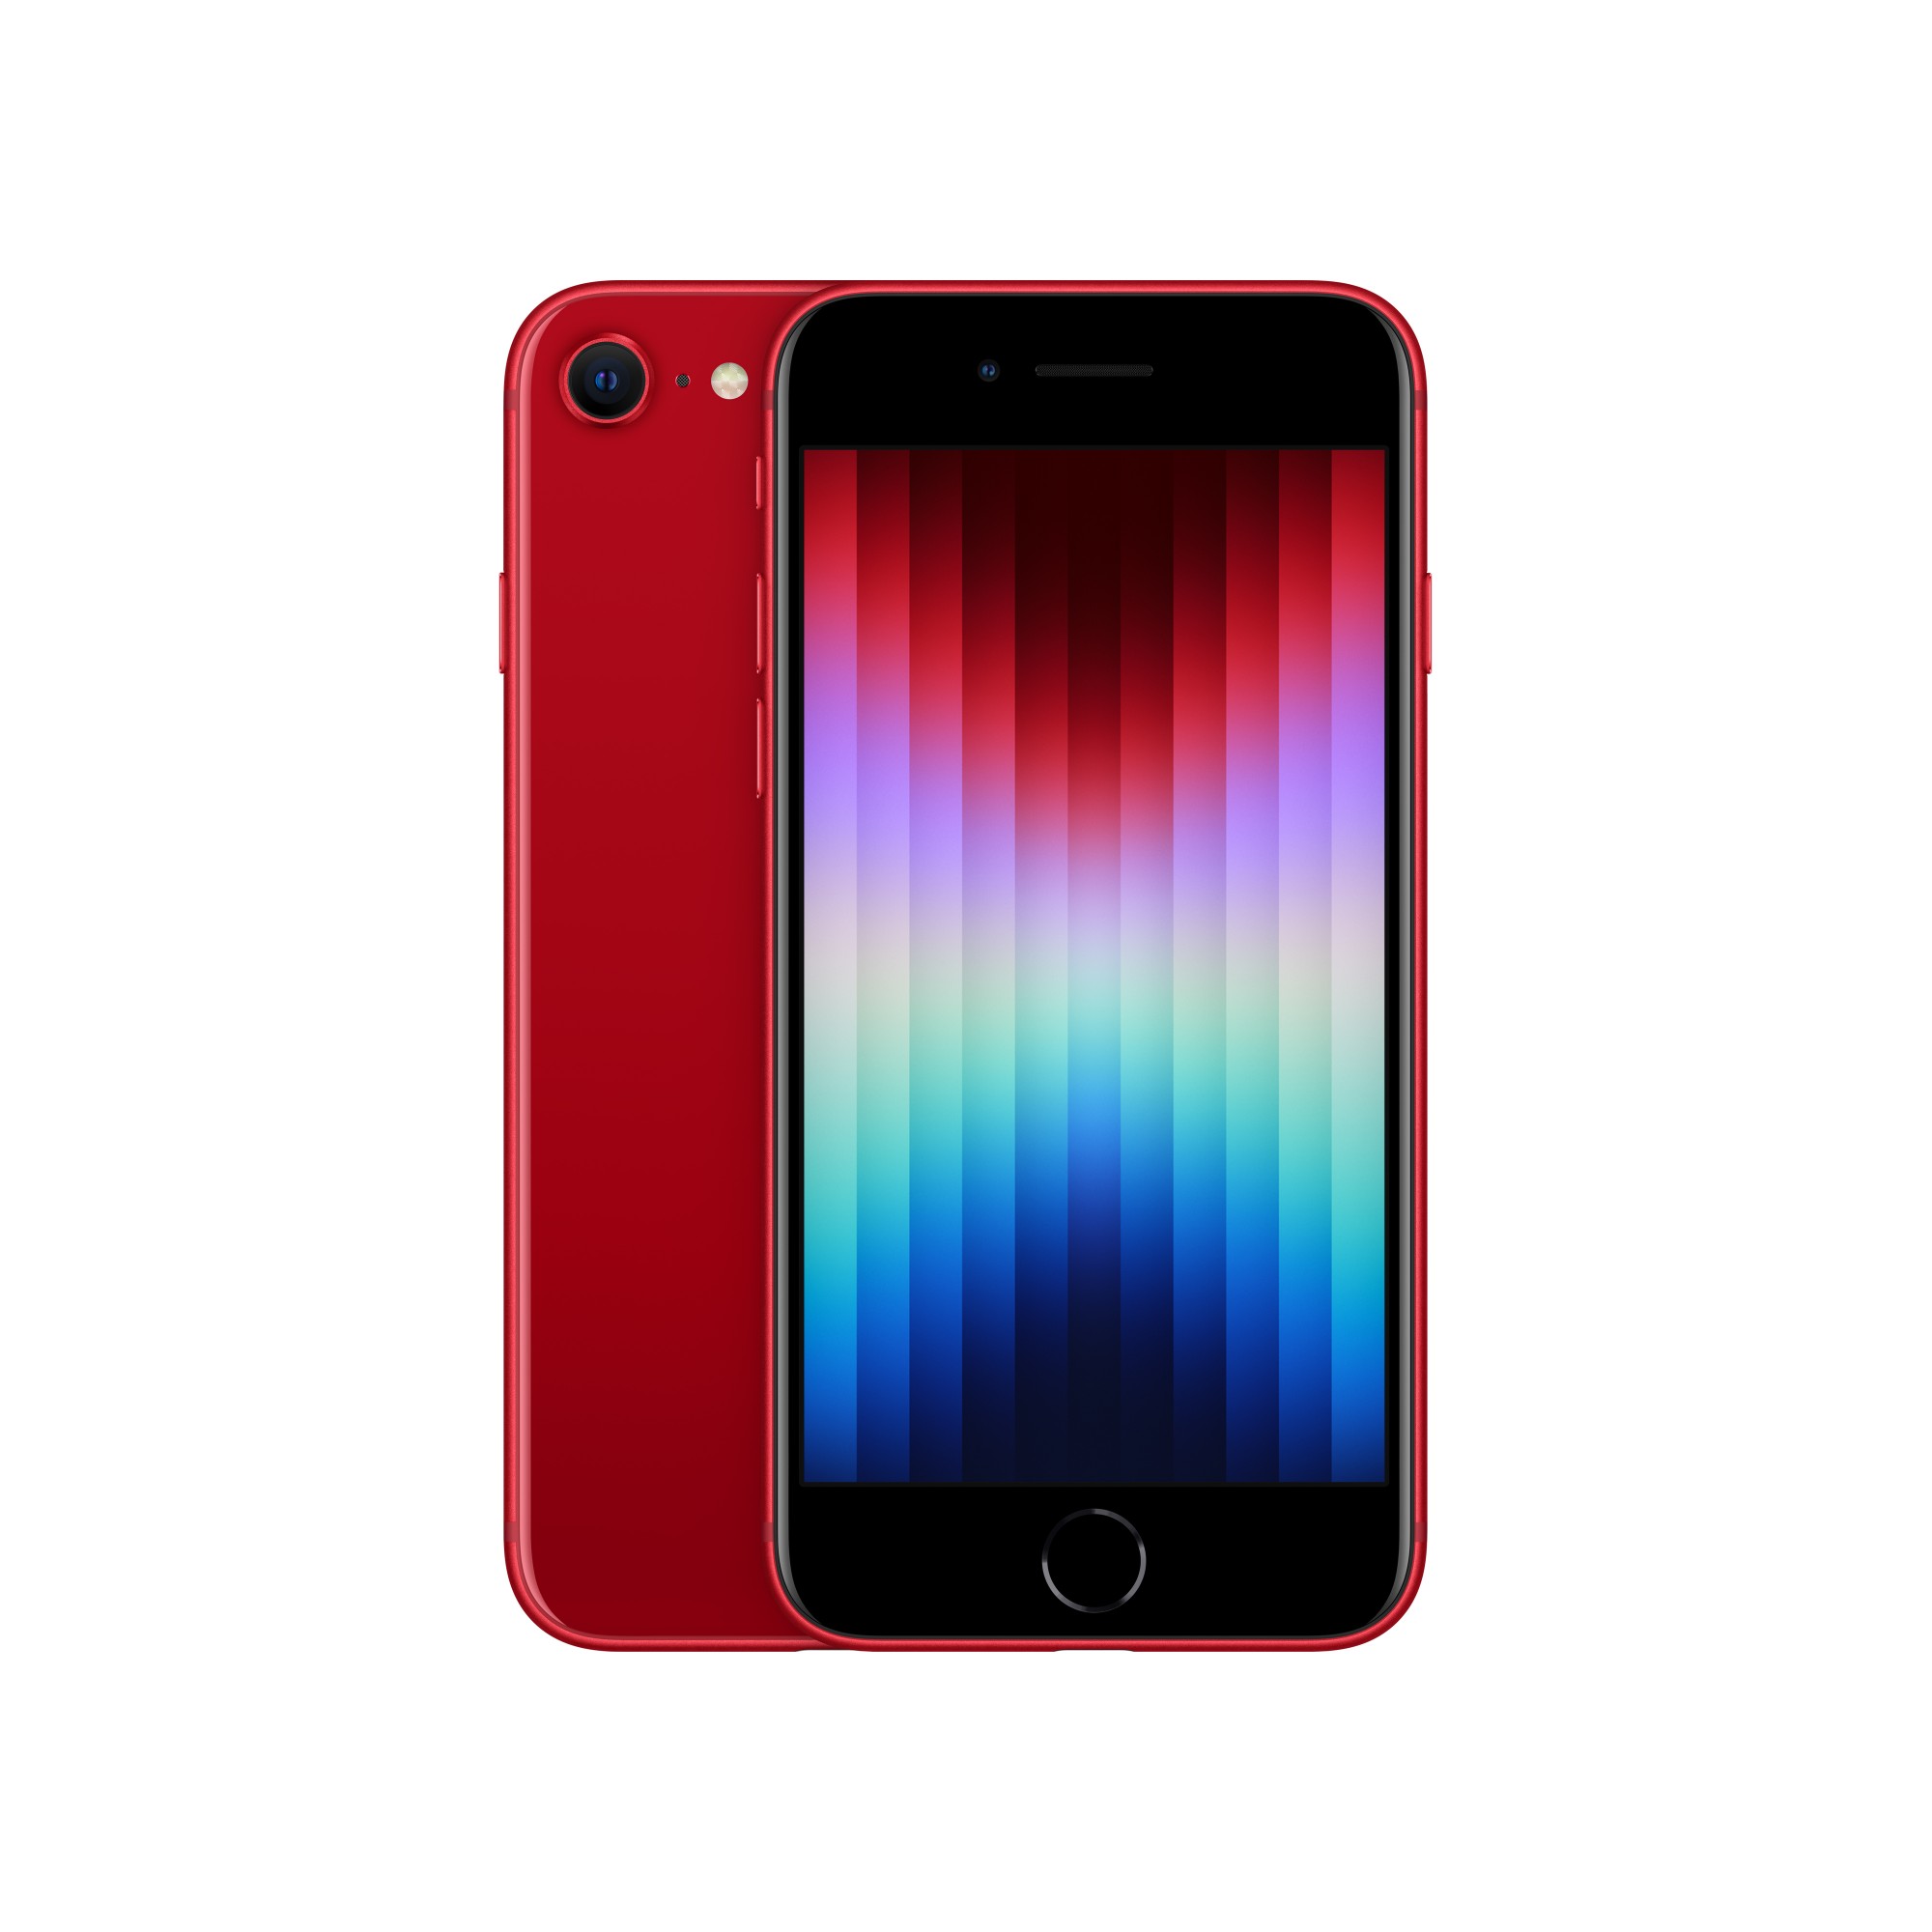 iPhone SE, 4.7" LCD, 1334 x 750, 326ppi, 256GB, A15 Bionic, LTE, 802.11ax, Bluetooth 5.0, NFC, 12MP + 7MP, IP67, iOS 15